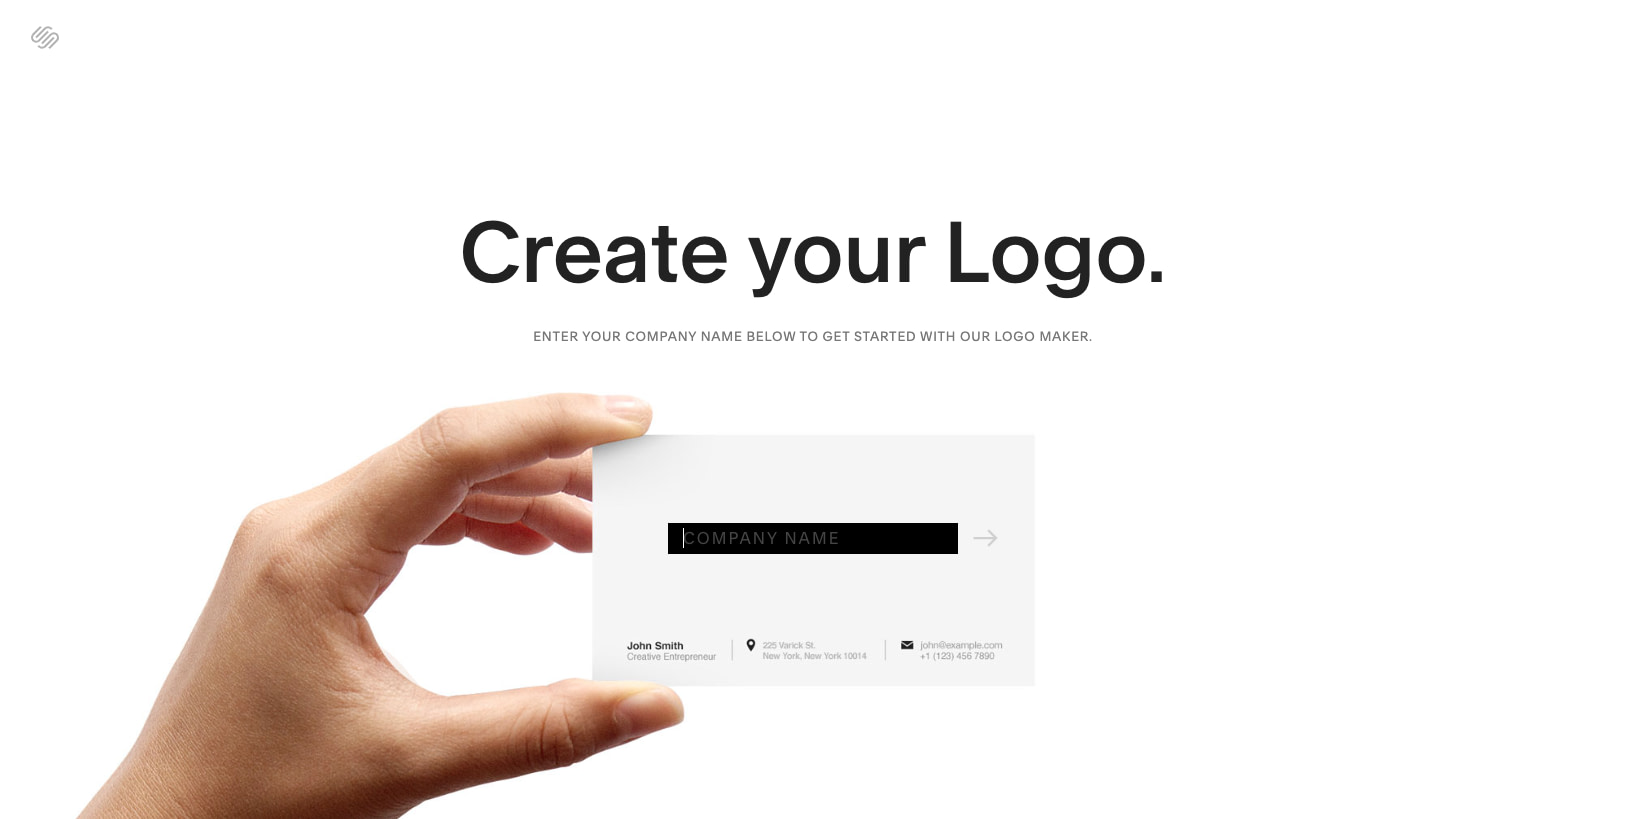 Squarespace has an excellent logo maker tool.